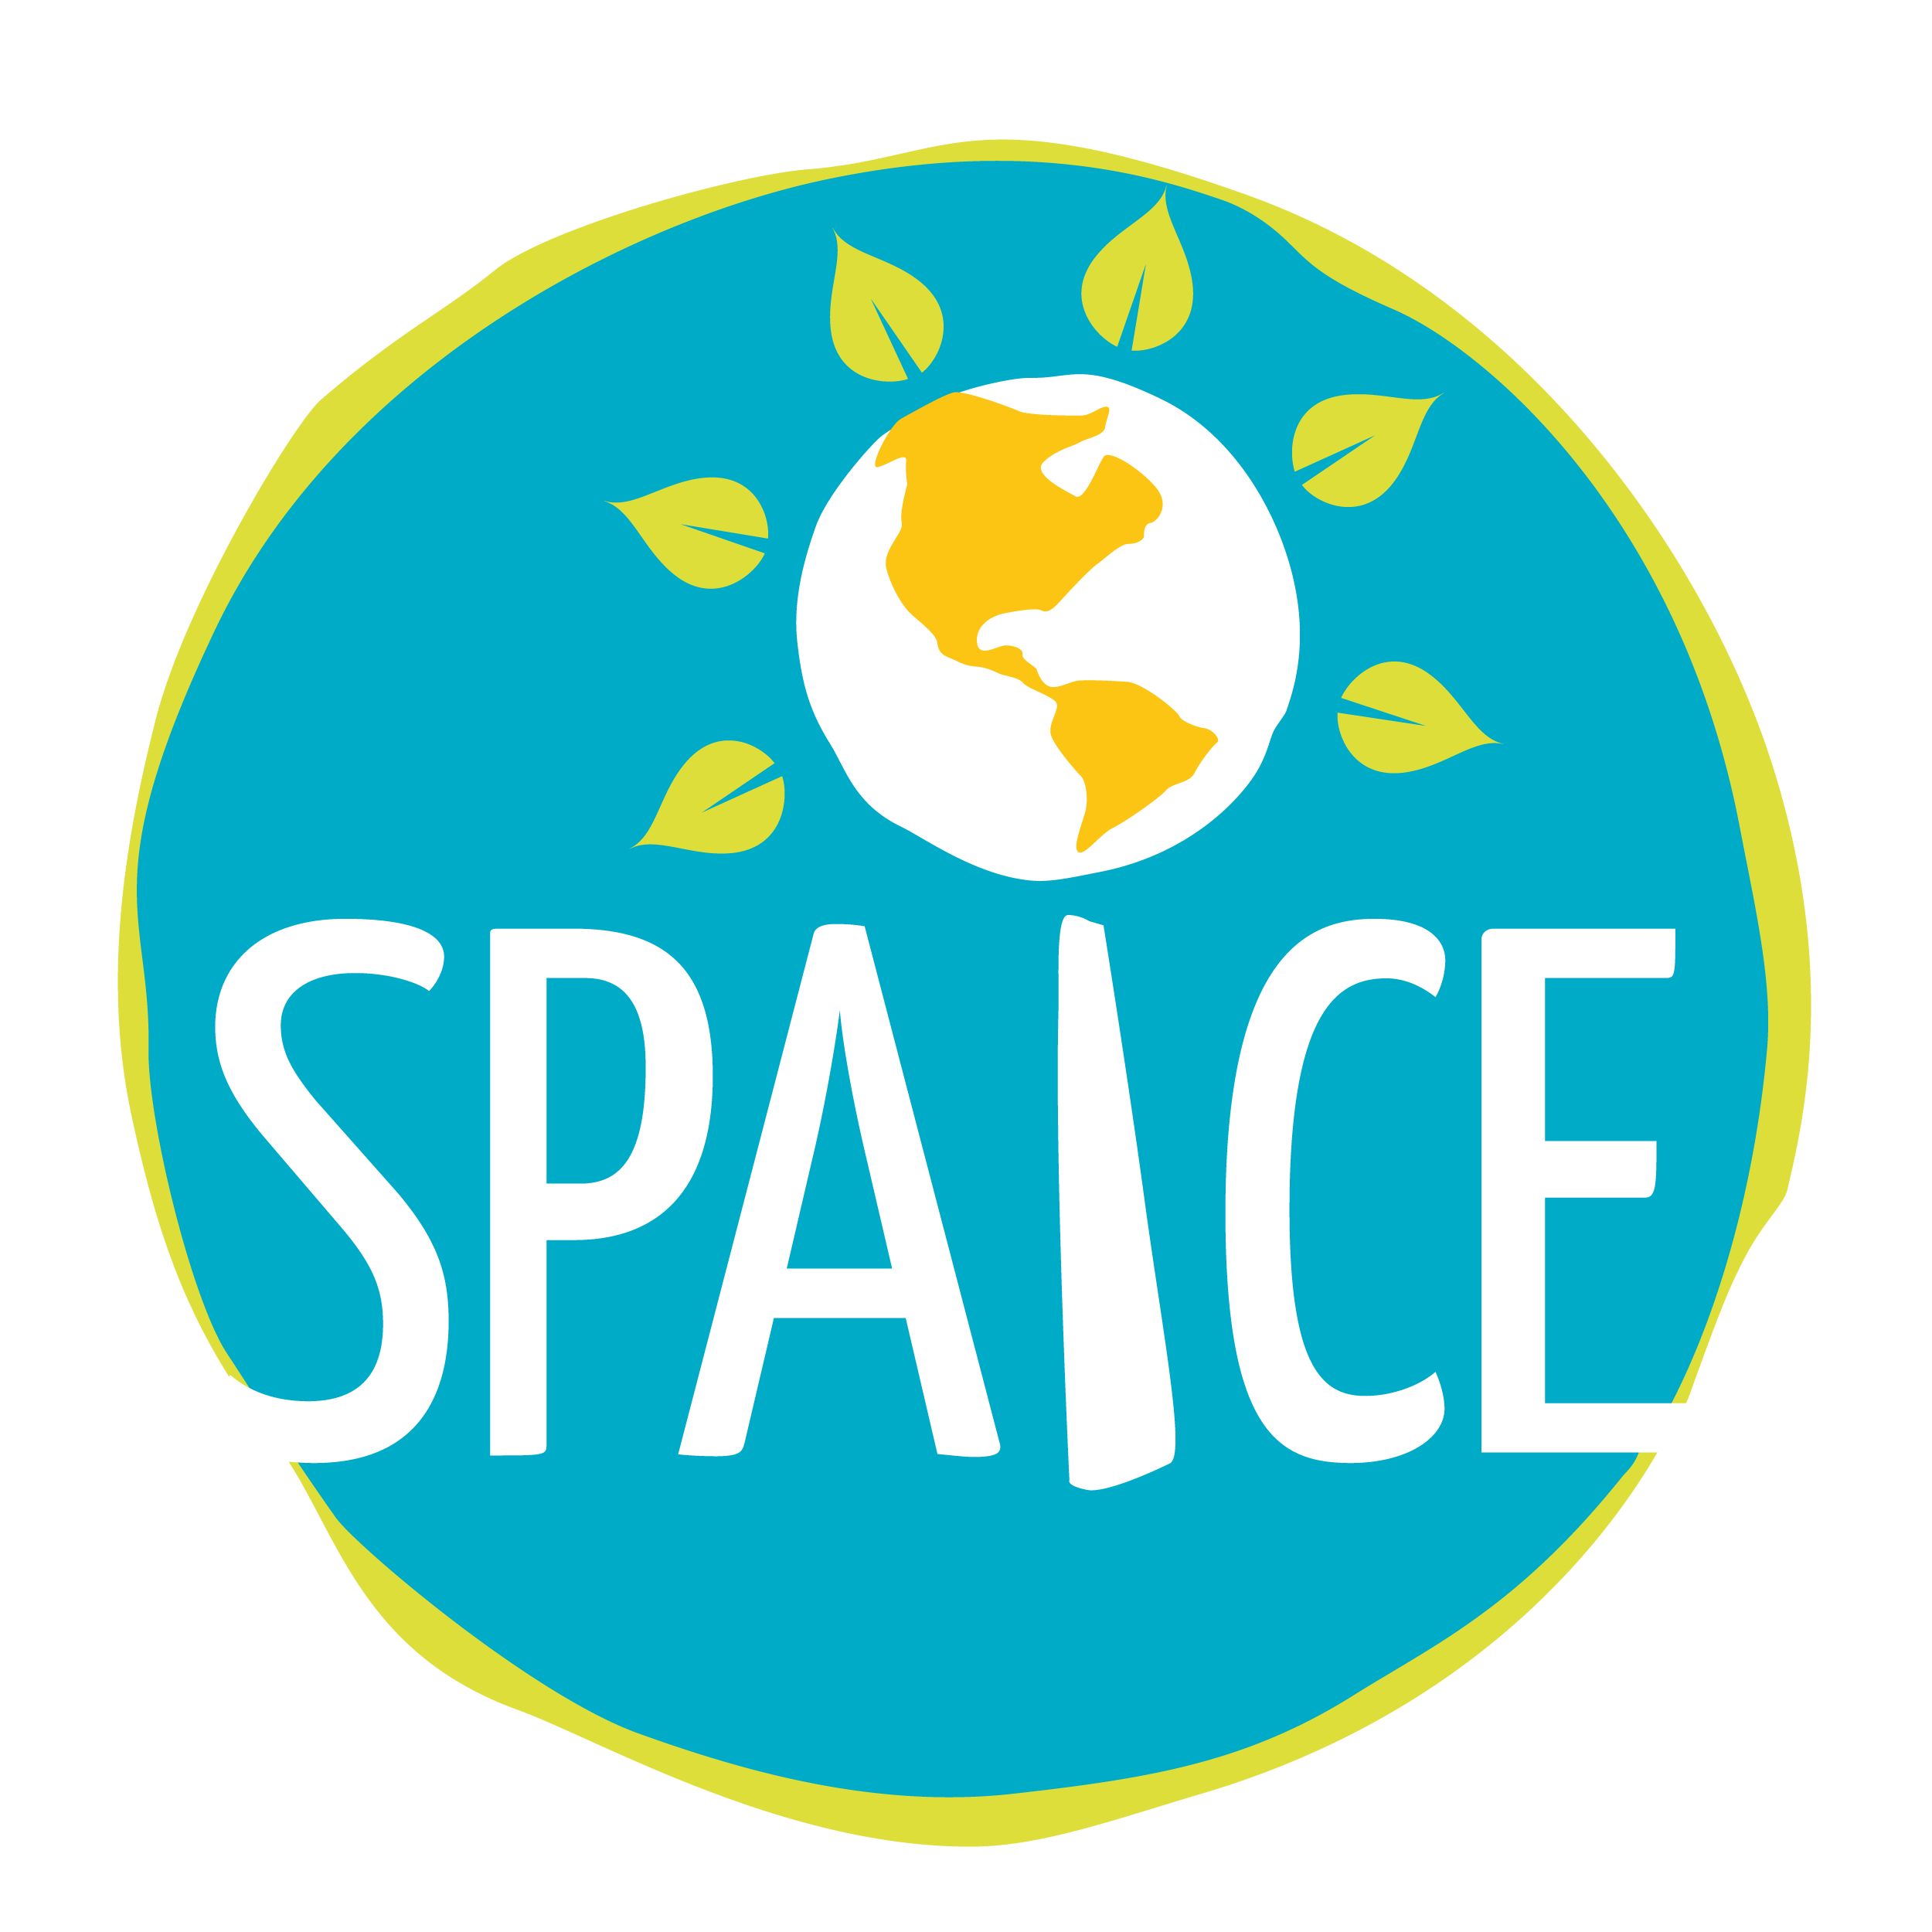 Spaice logo